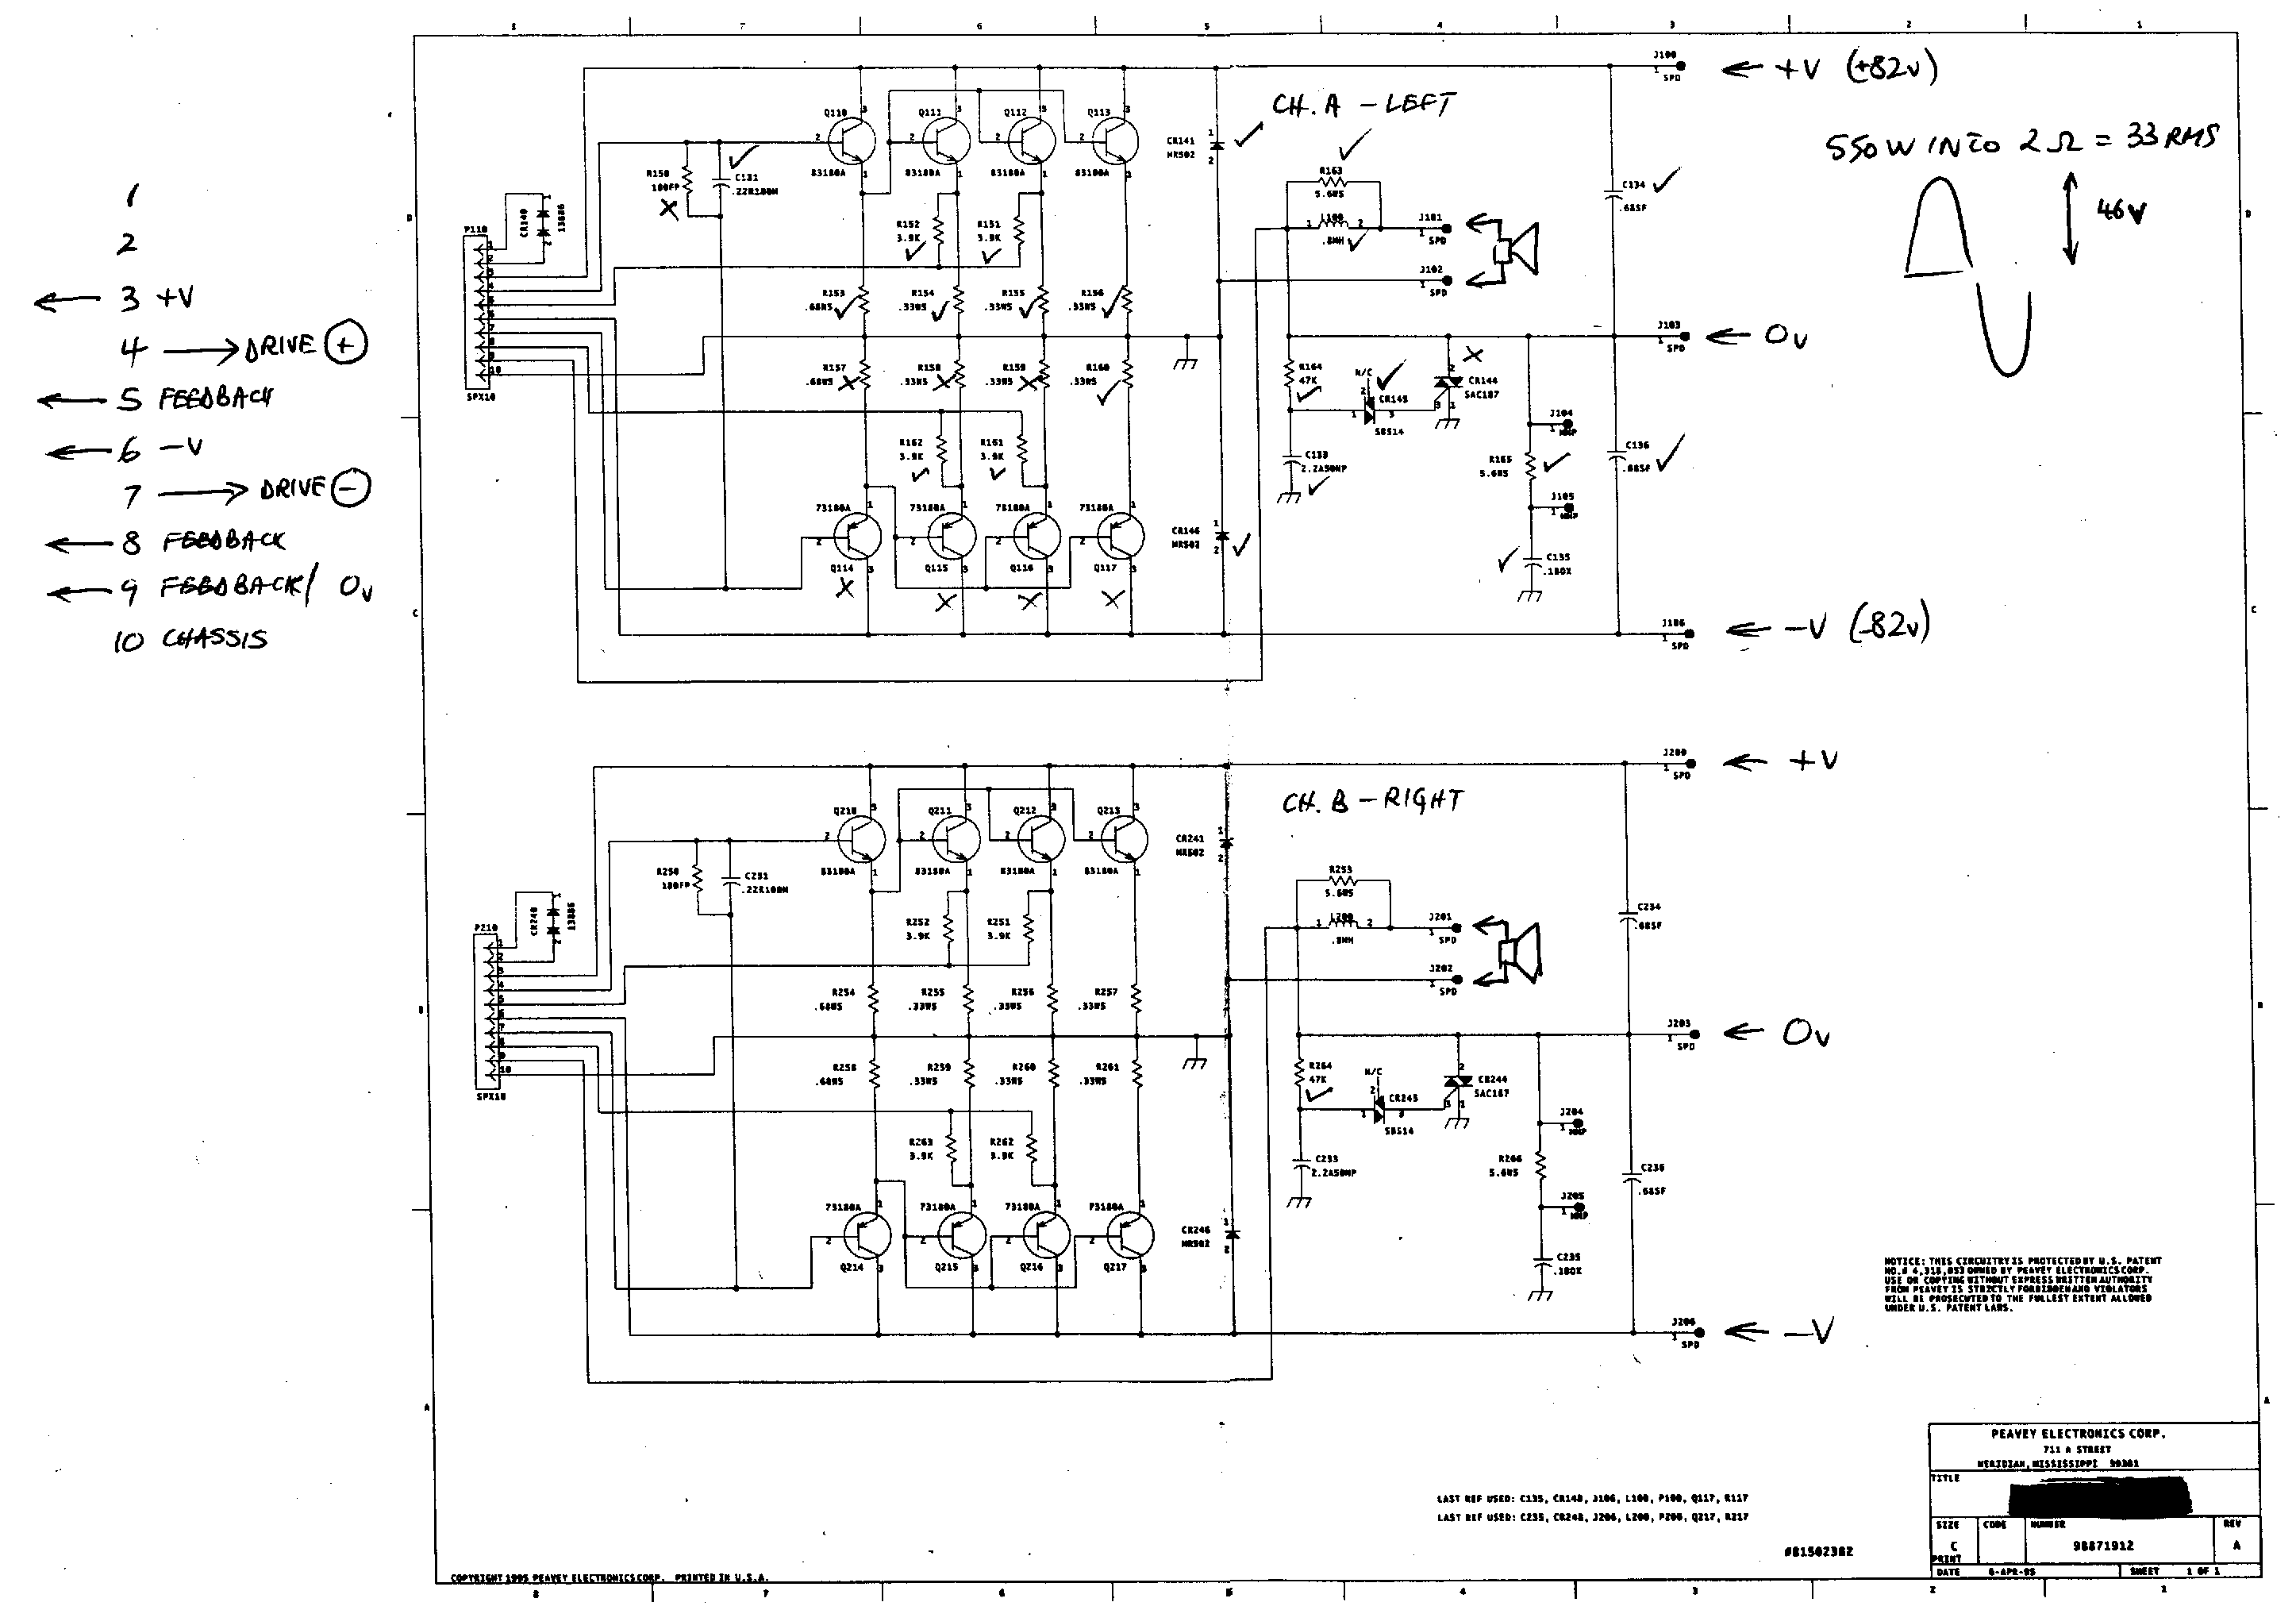 Pioneer a-80 Power amplifier schematic